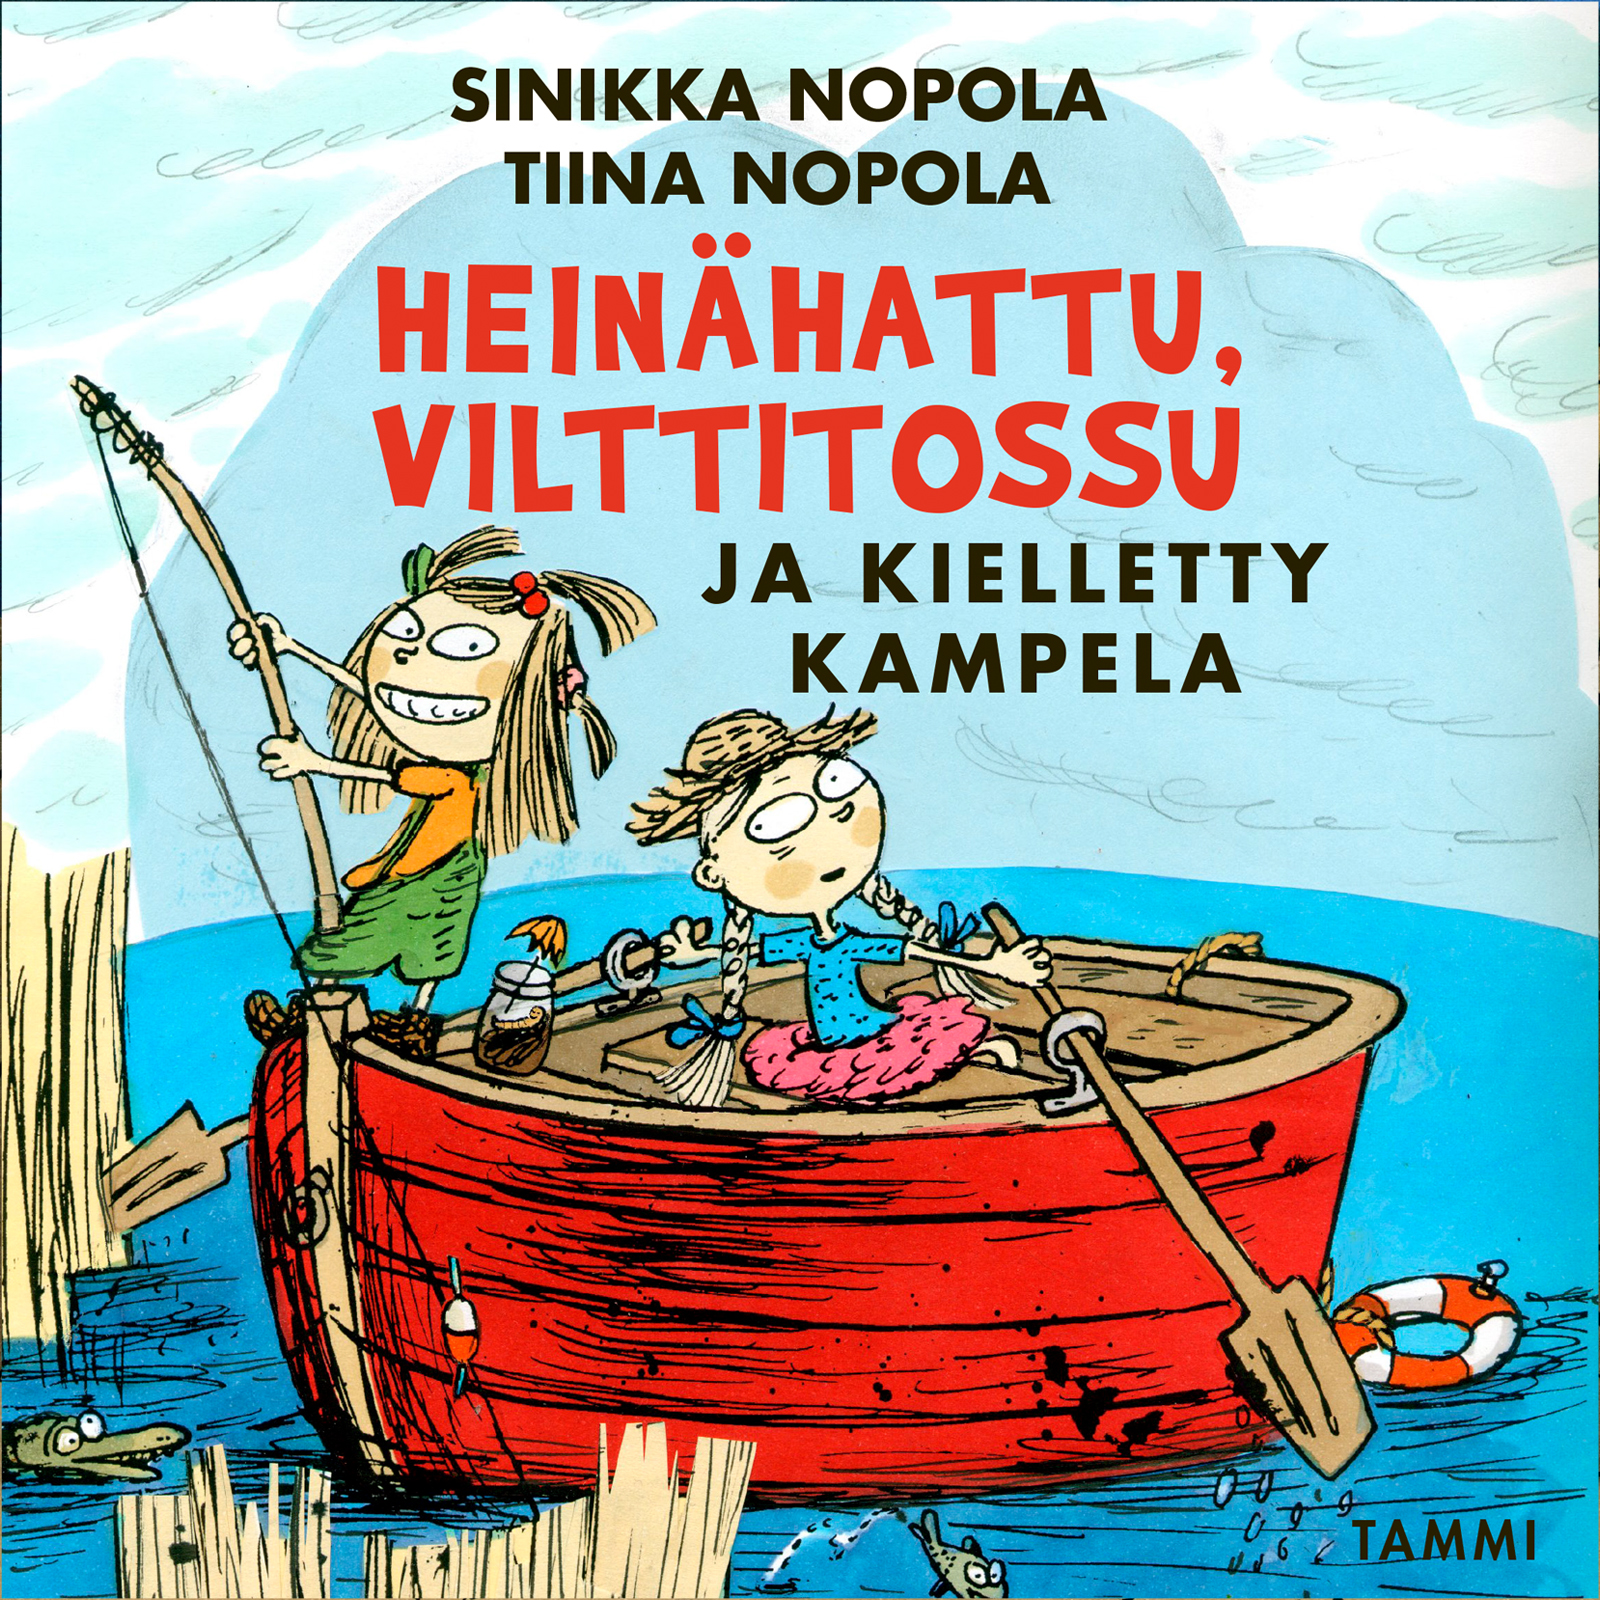 Nopola, Tiina - Heinähattu, Vilttitossu ja kielletty kampela, audiobook